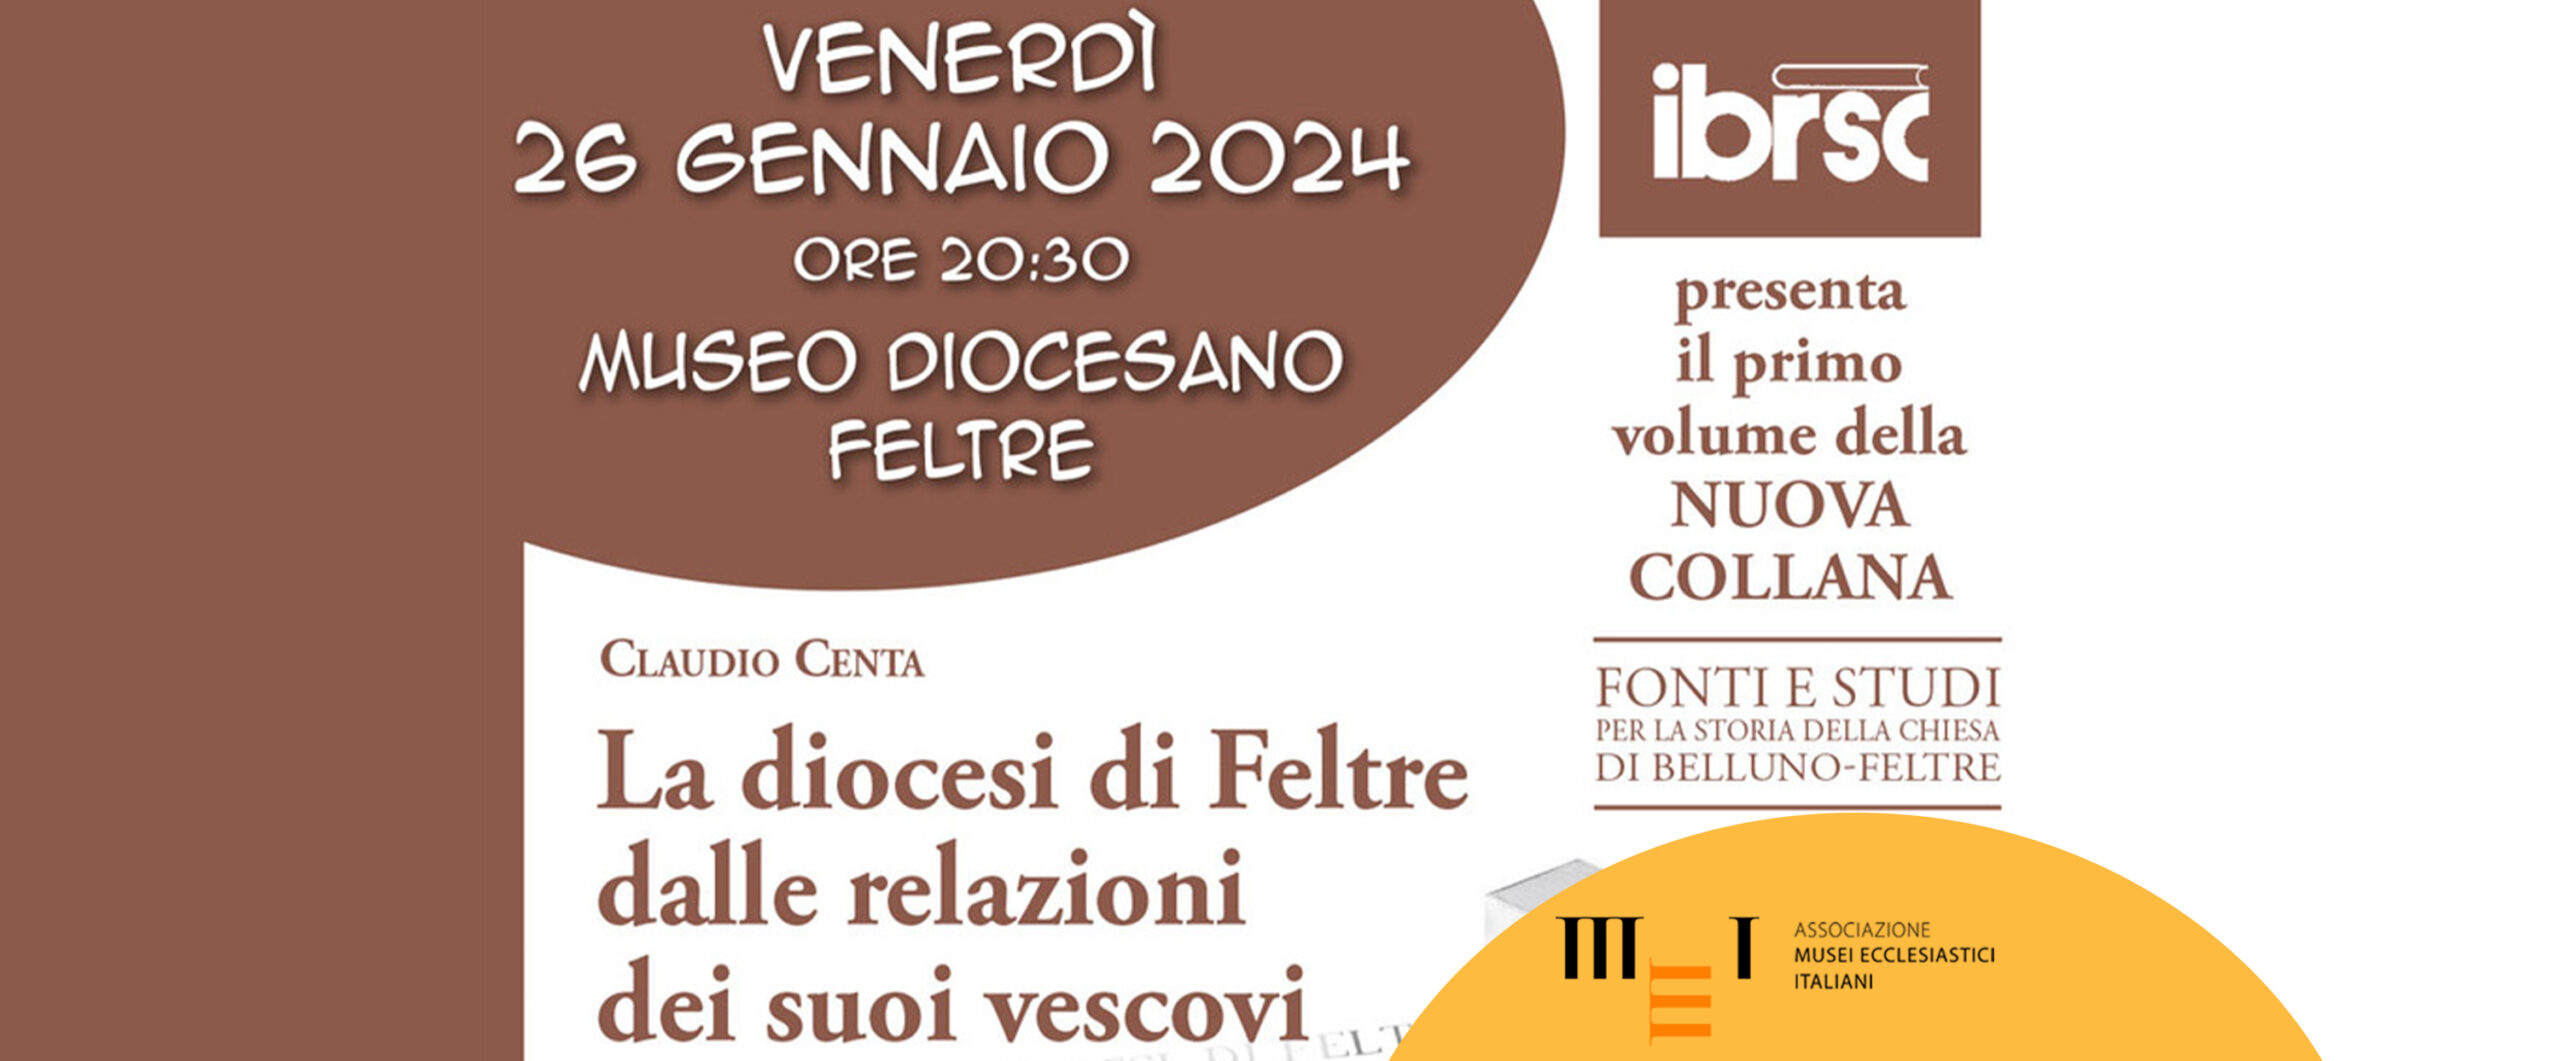 Presentazione del libro del prof. Don Claudio Centav, 26 gennaio 2024 al Museo Diocesano di Belluno-Feltre